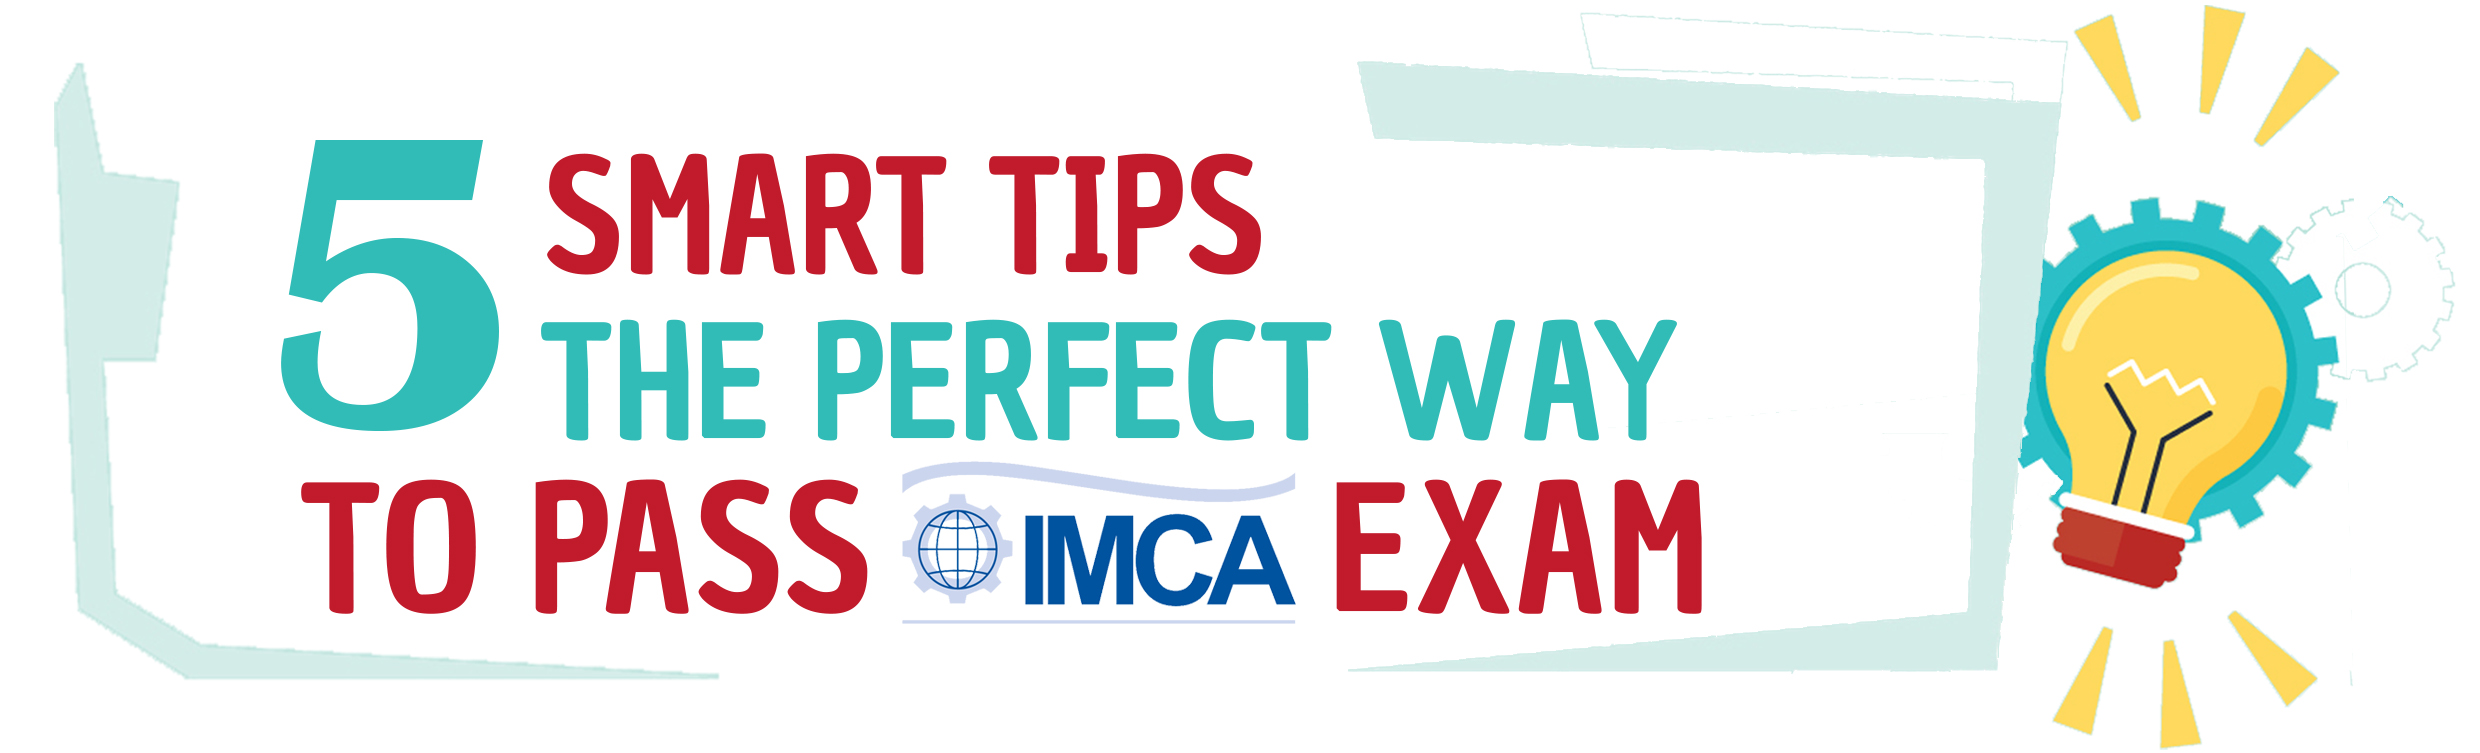 The Perfect Way to Pass the IMCA exam